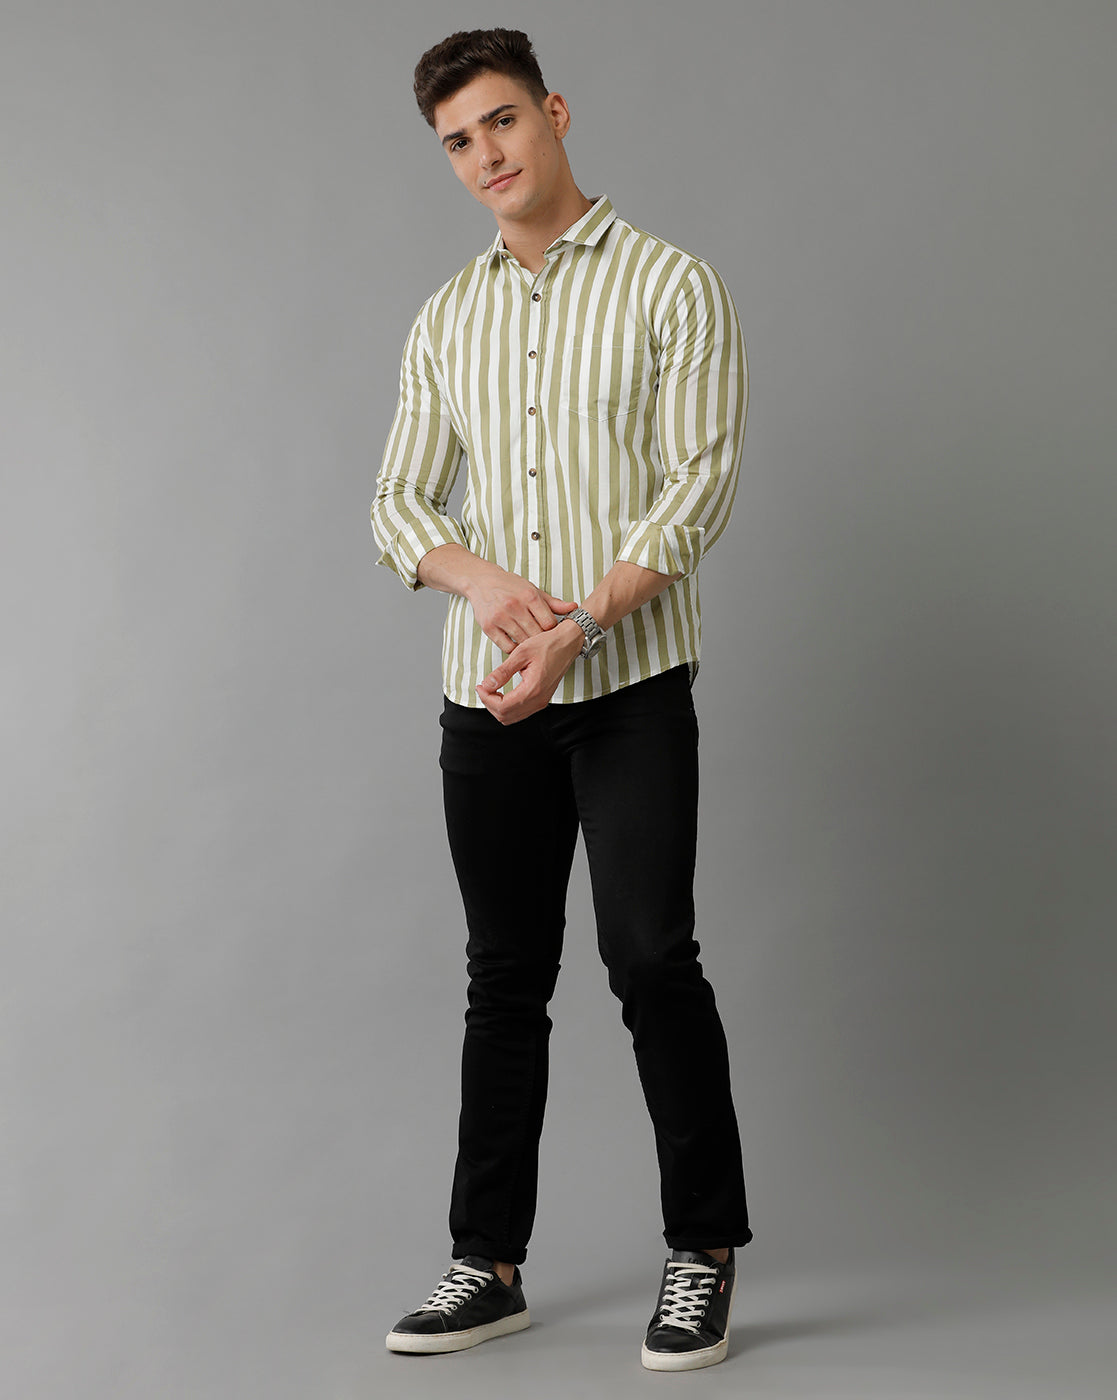 Vertical striped shirt full sleeve